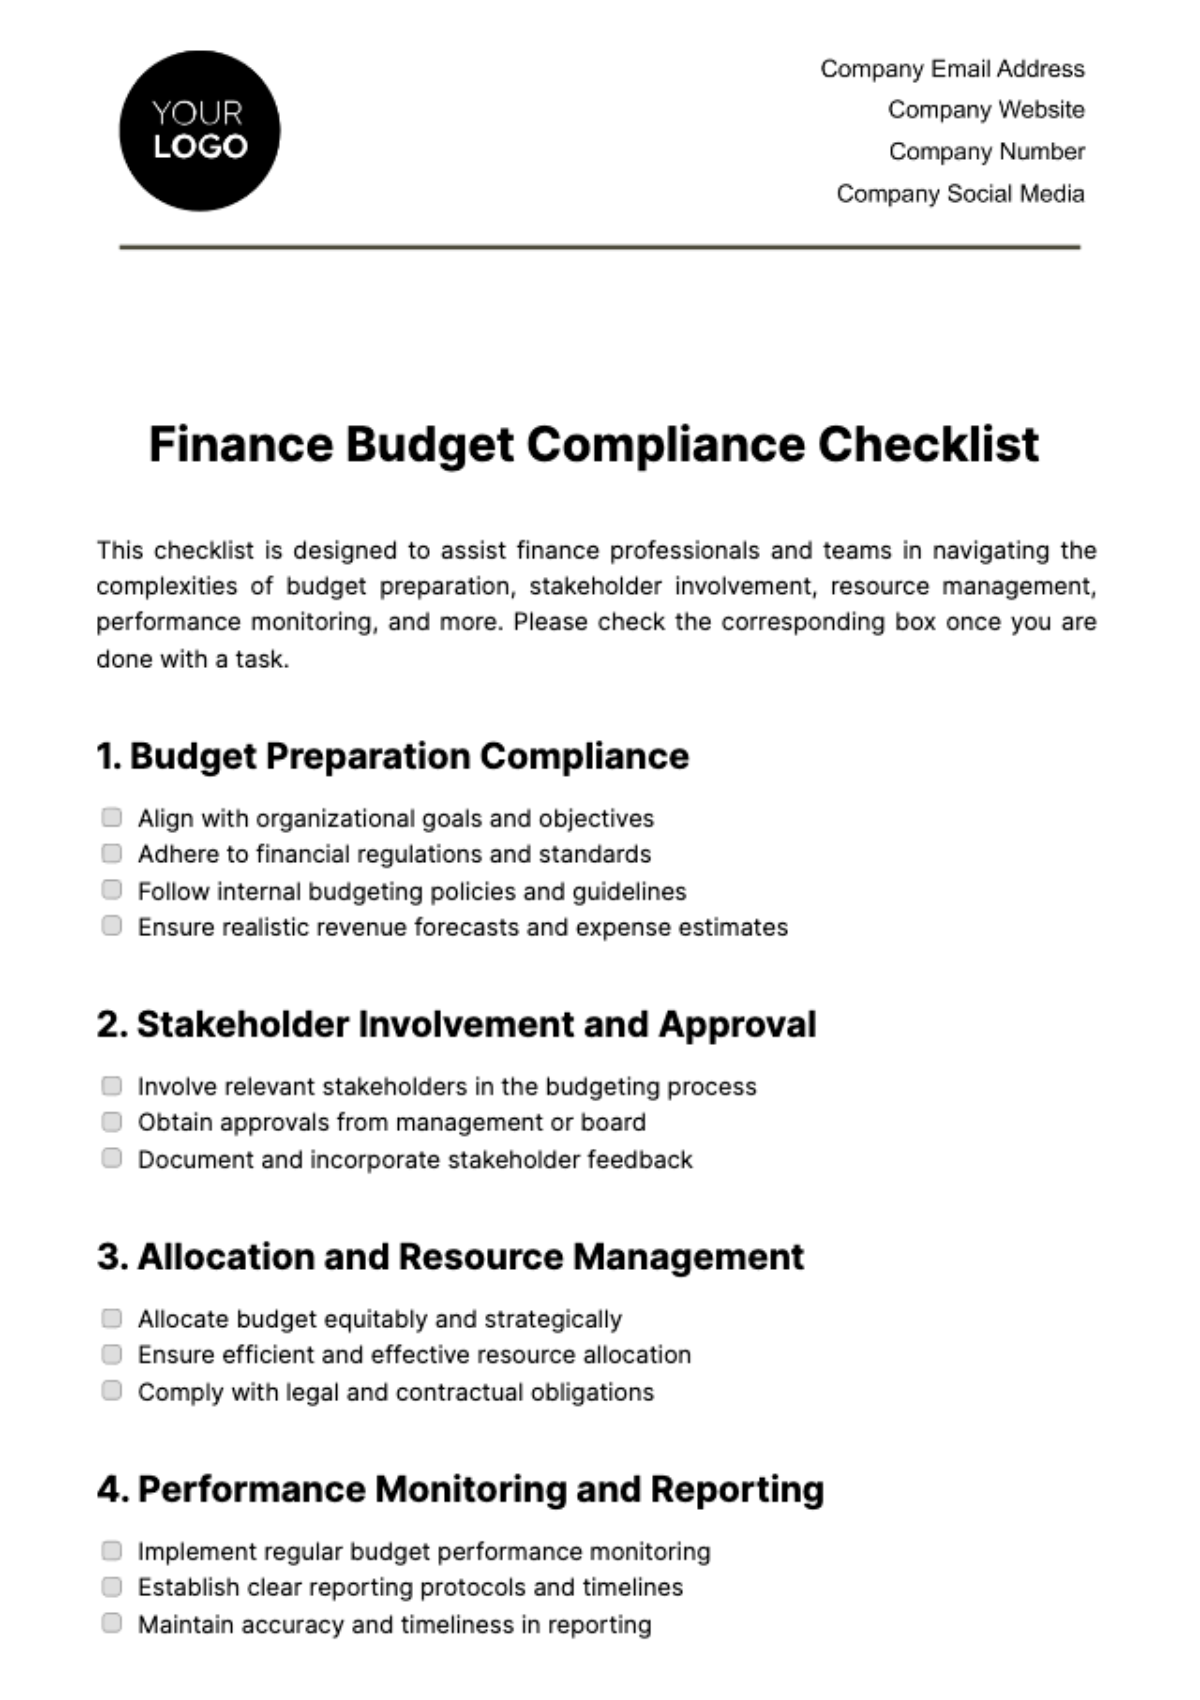 Free Finance Budget Compliance Checklist Template